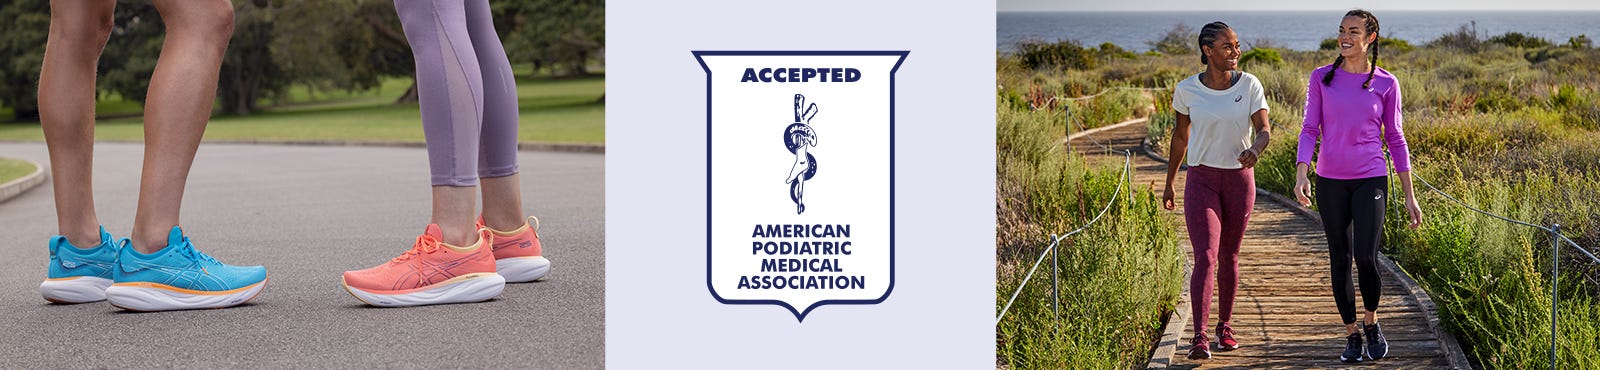 American Podiatric Medical Association (APMA) Seal of Acceptance.  